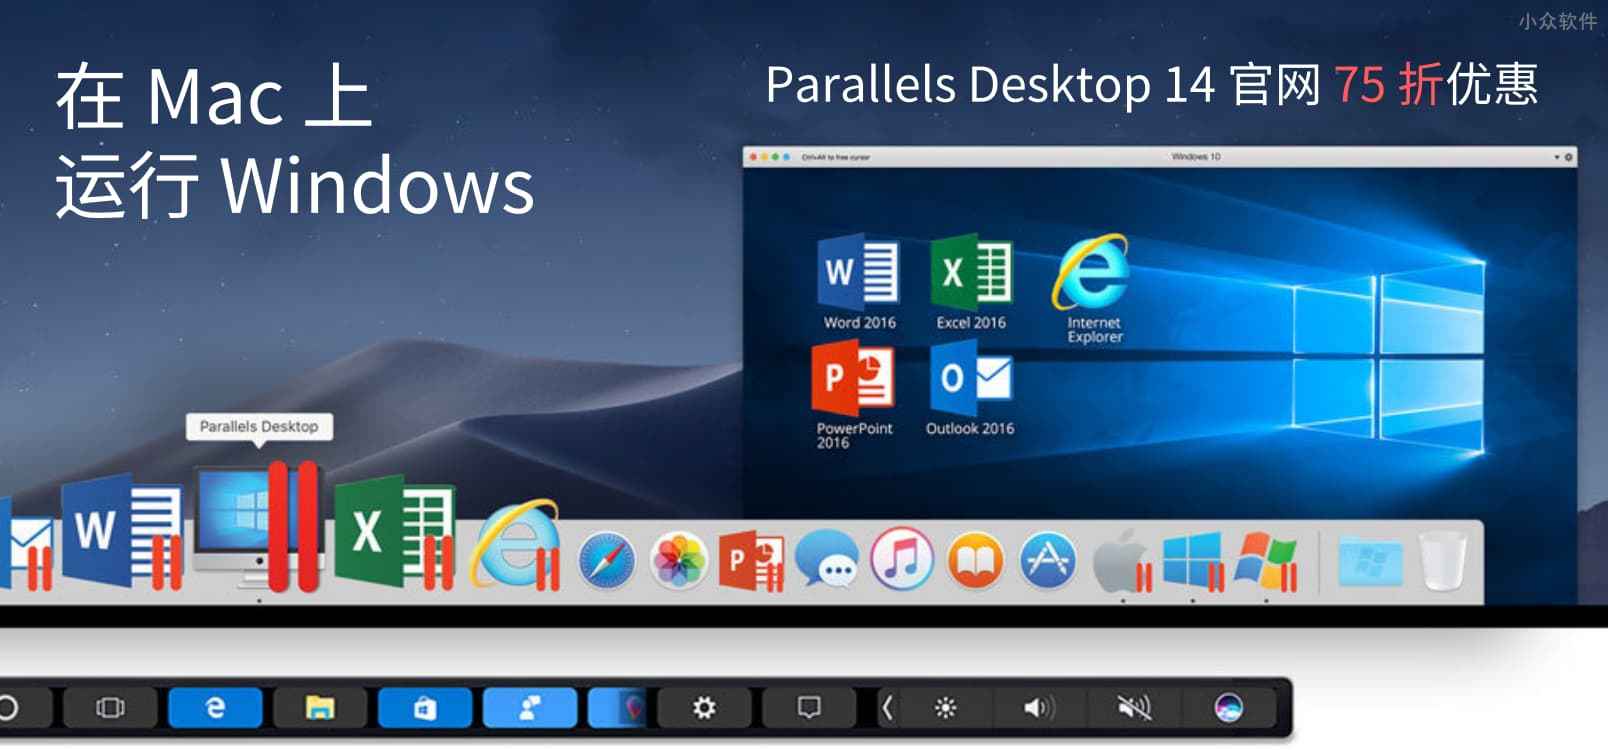 Parallels Desktop 14 官网 75 折优惠，在 Mac 上轻松运行 Windows 1